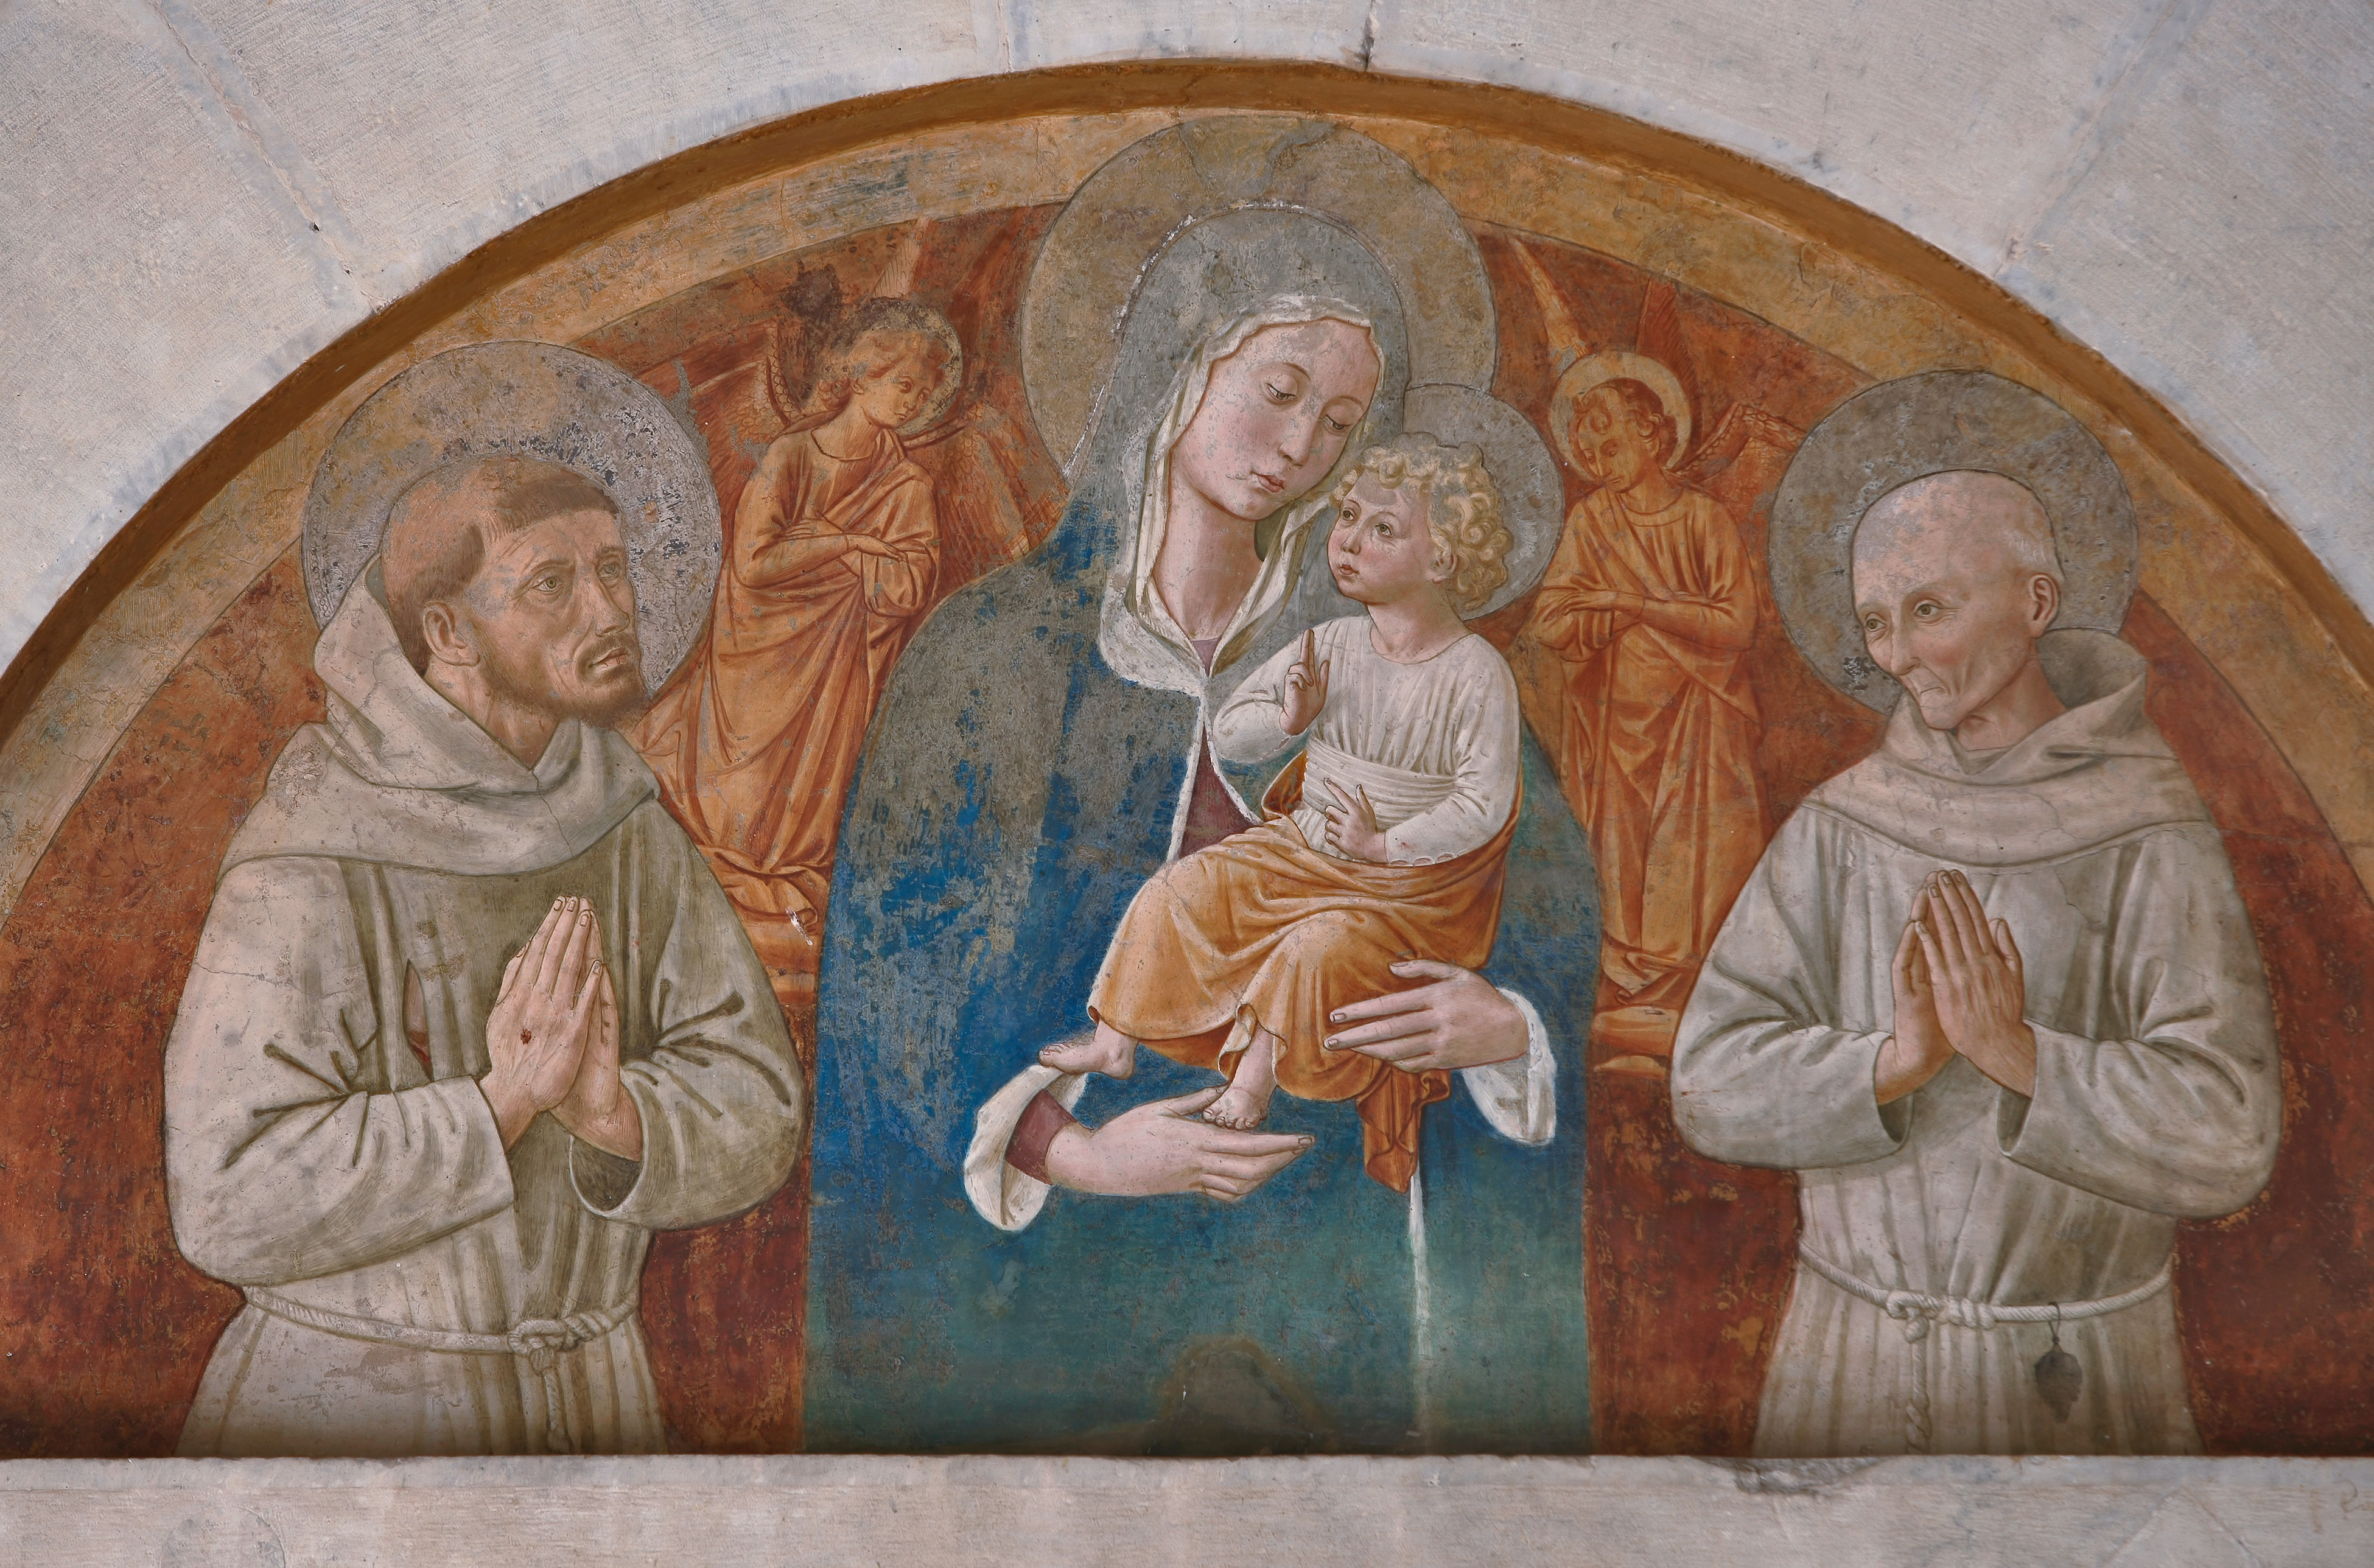 Montefalco, Church of San Fortunato, lunette above the portal: "Madonna and Child with Saints Francis and Bernardino", fresco by Benozzo Gozzoli.